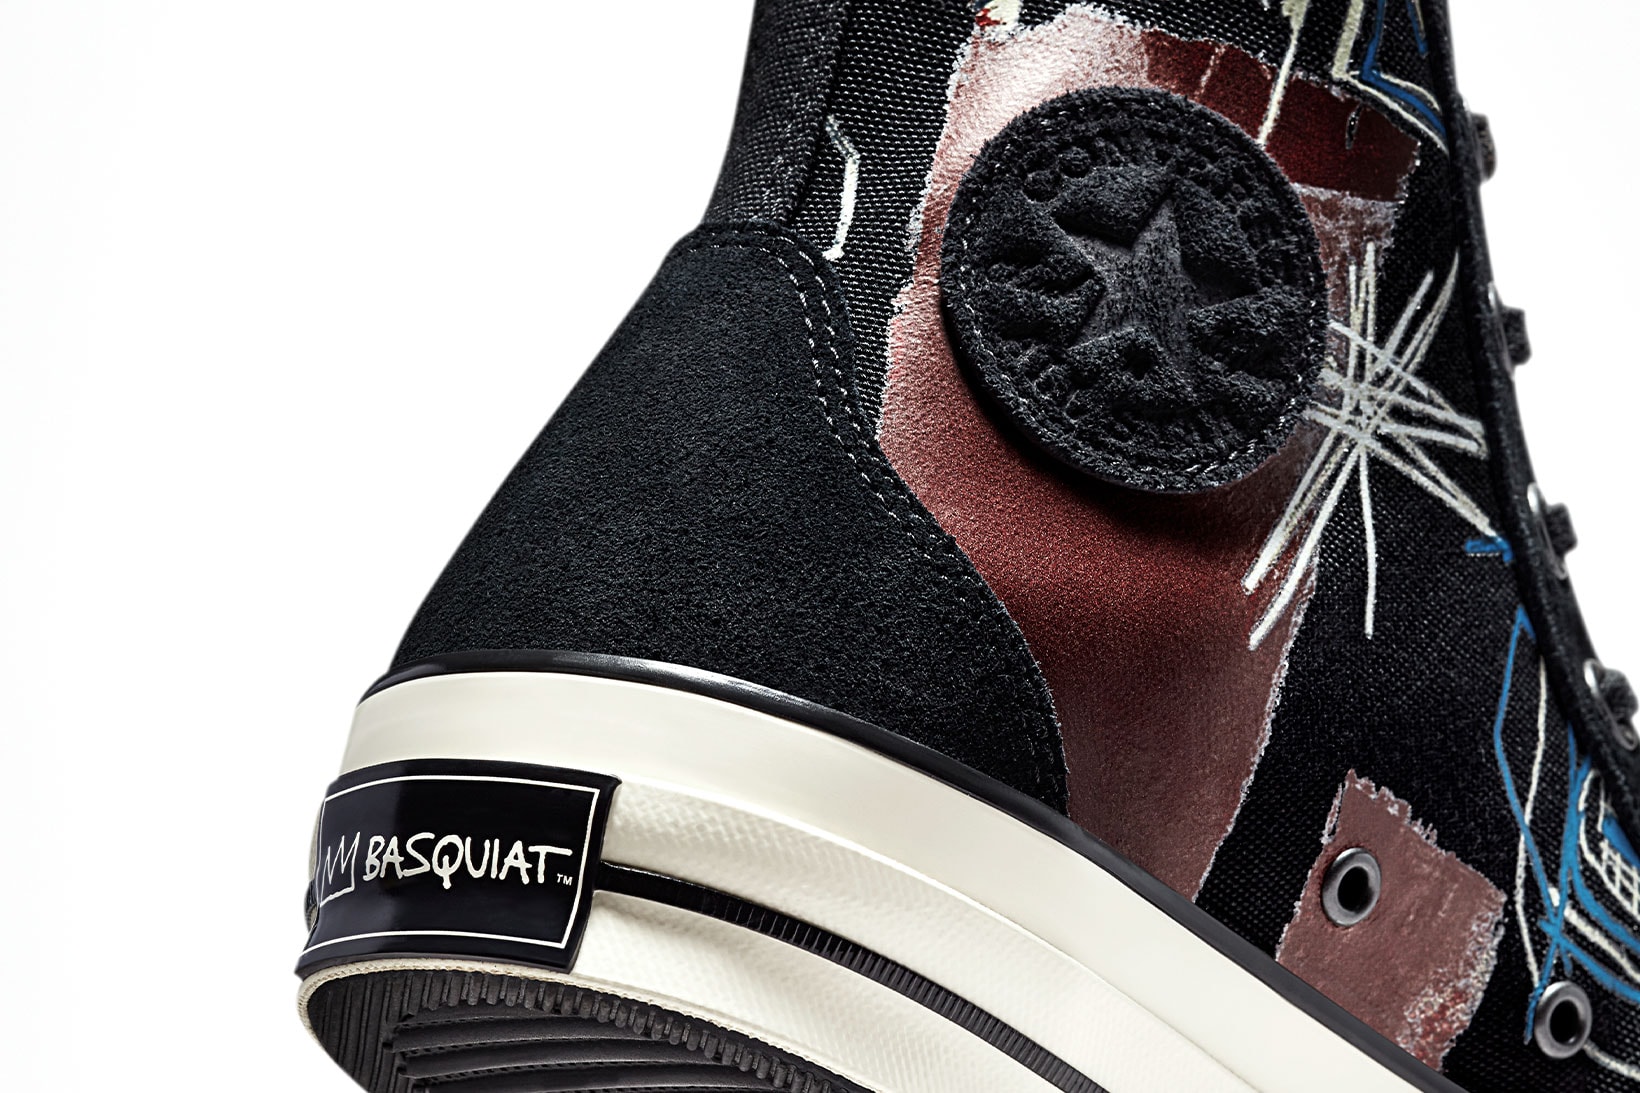 Converse Jean-Michel Basquiat Collaboration Sneakers Footwear 